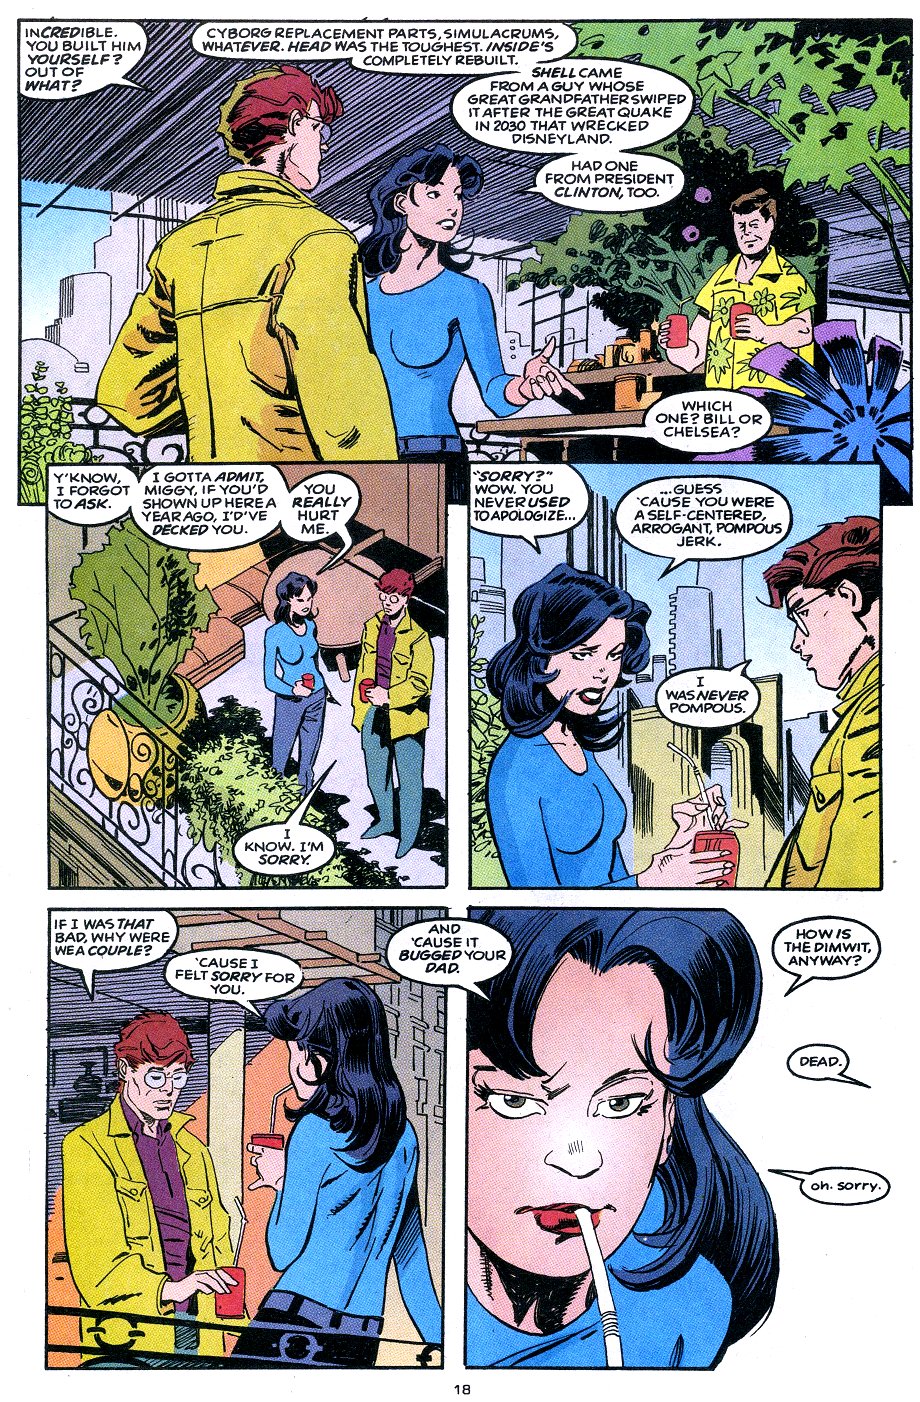 Spider-Man 2099 (1992) issue 23 - Page 14